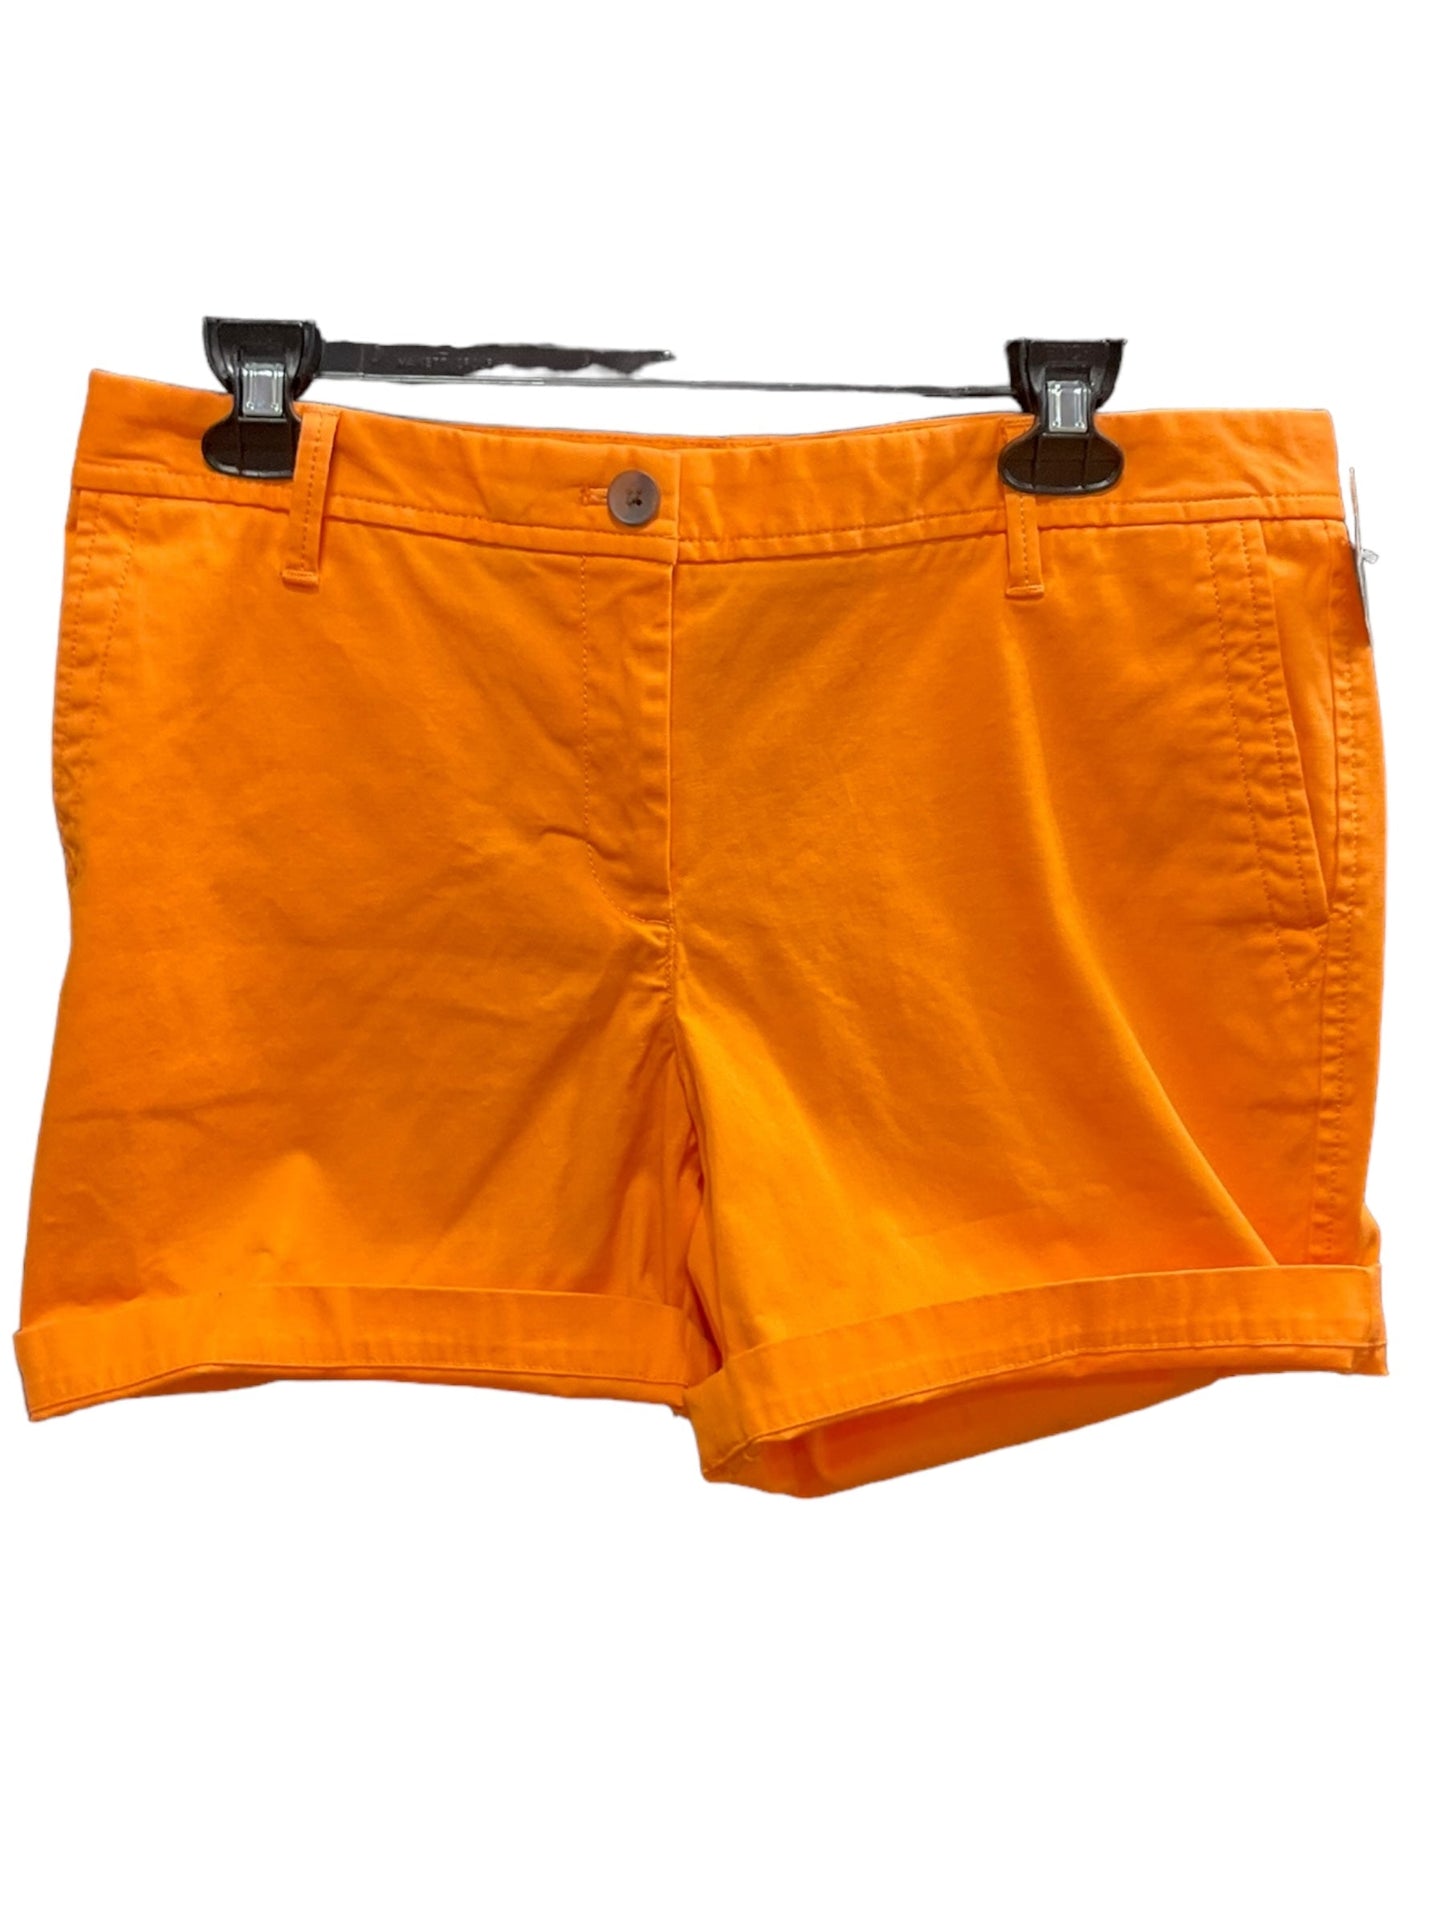 Orange Shorts Talbots, Size M